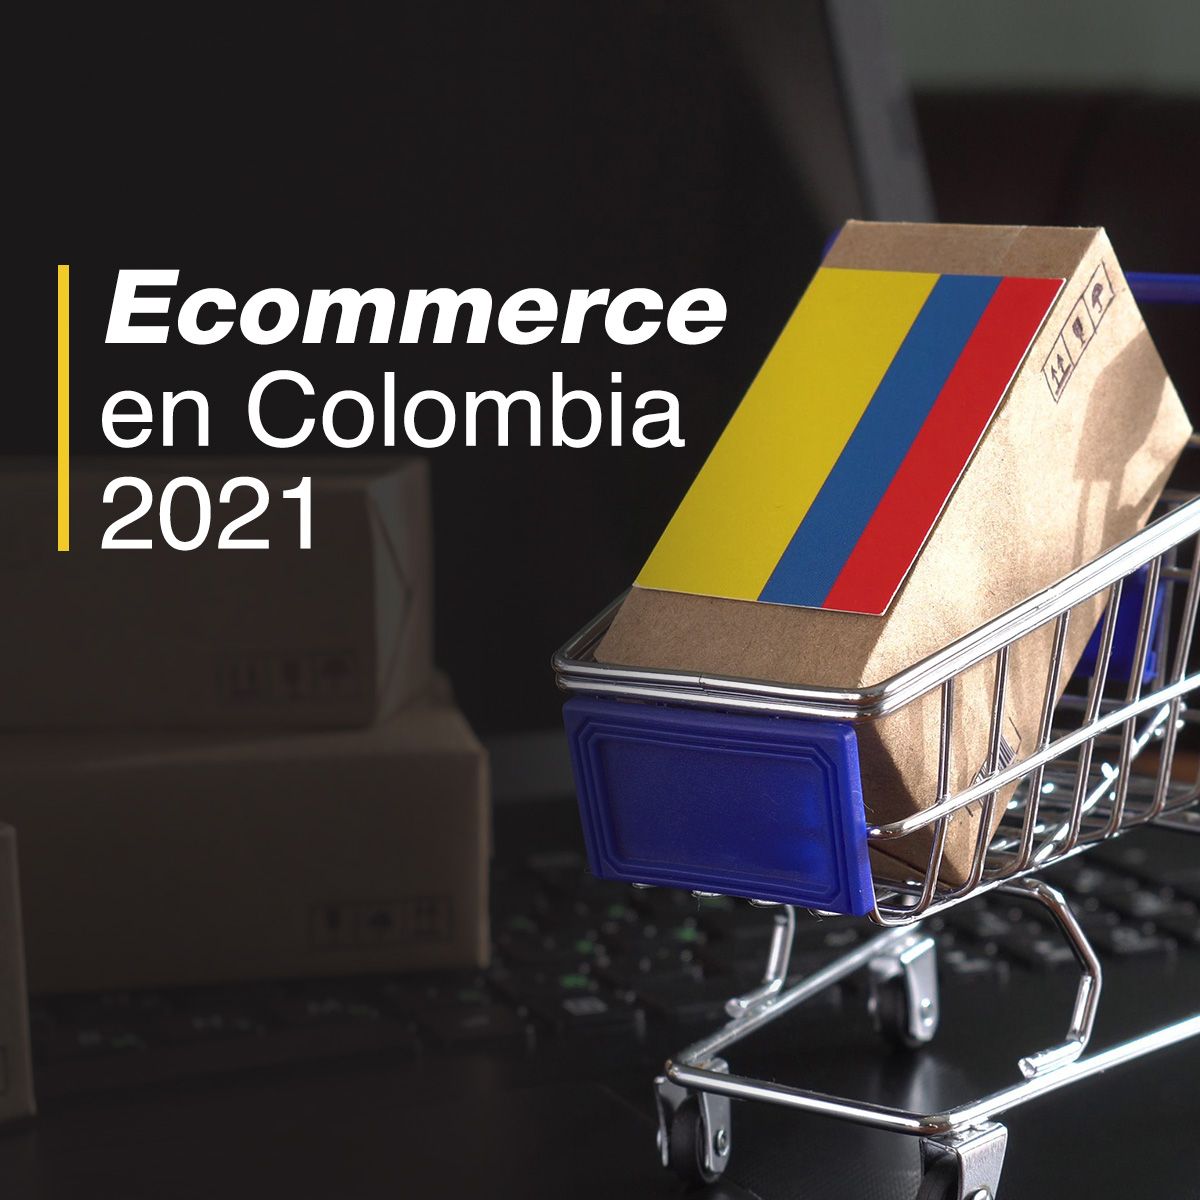 Ecommerce en Colombia 2021